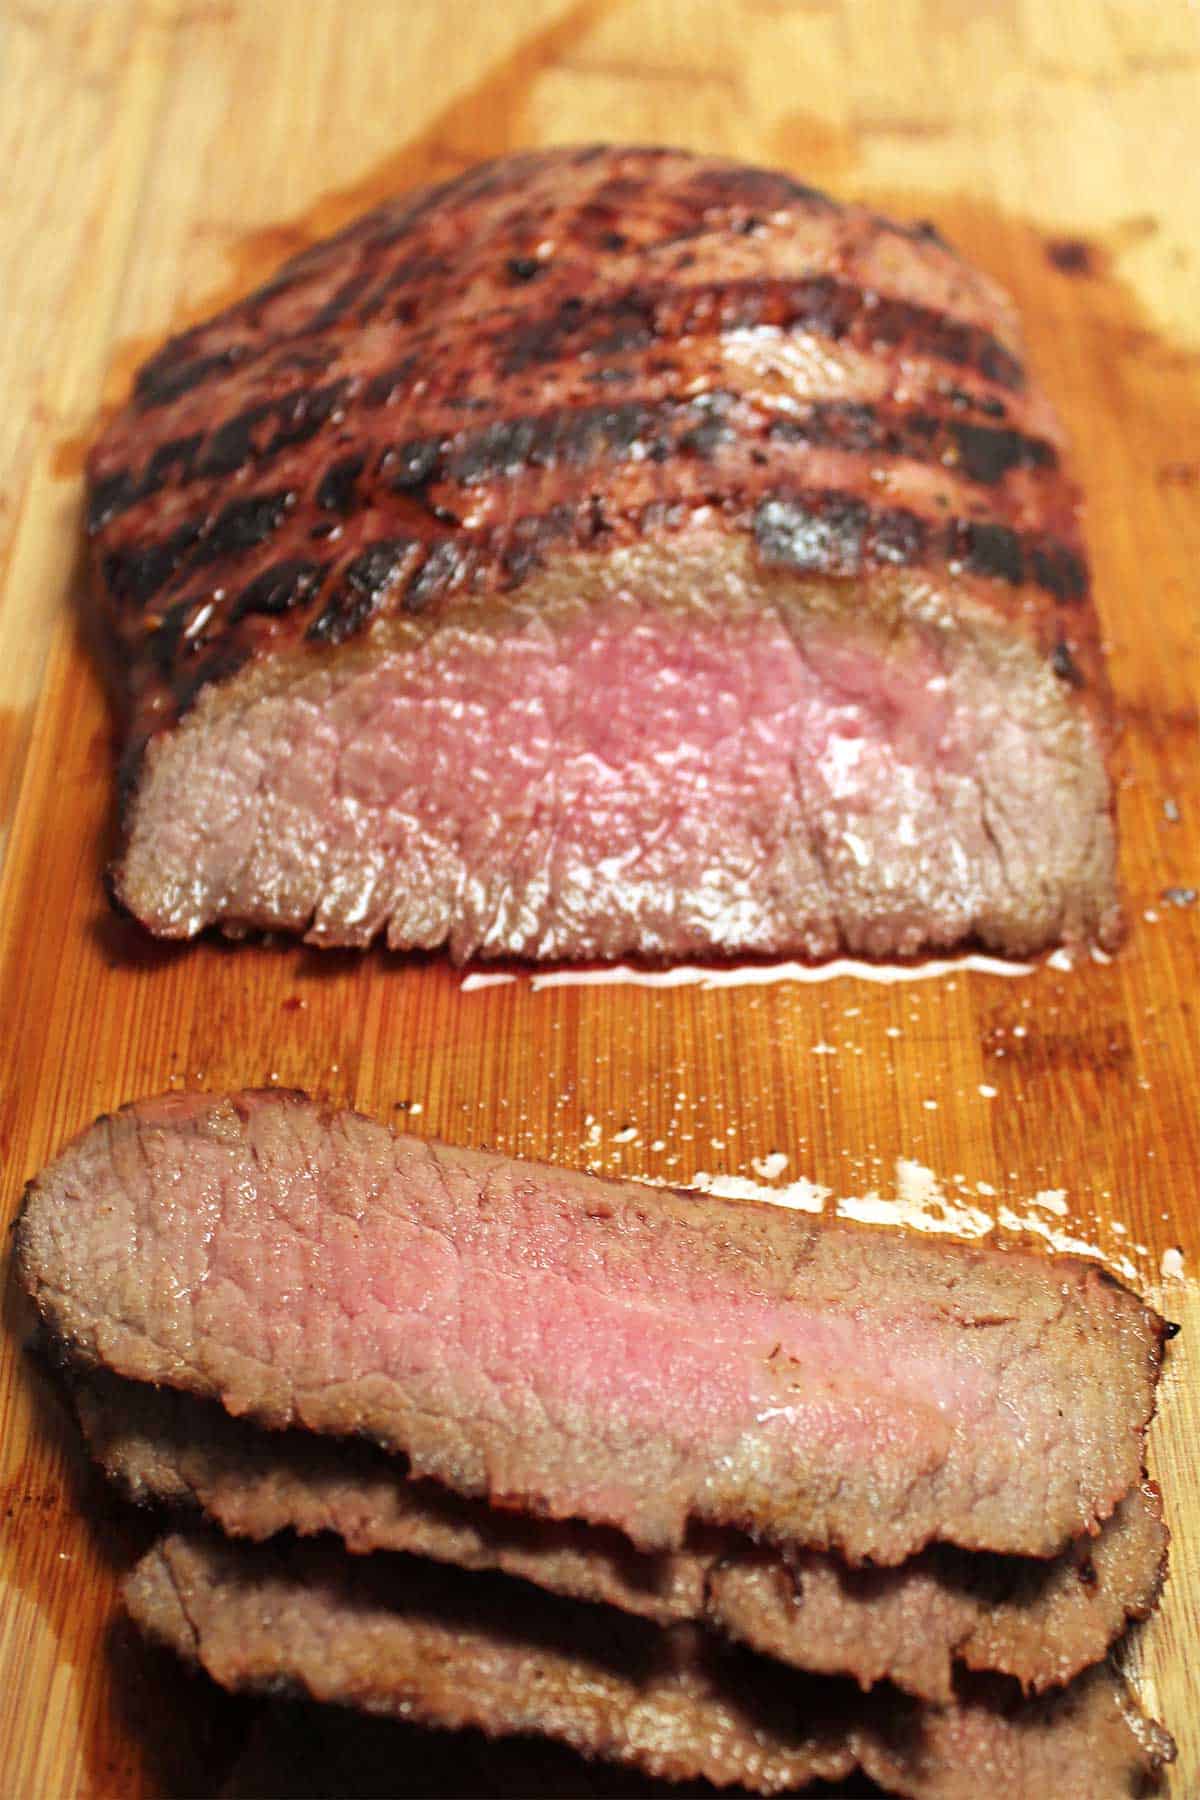 Partially sliced flank steak on cutting board.